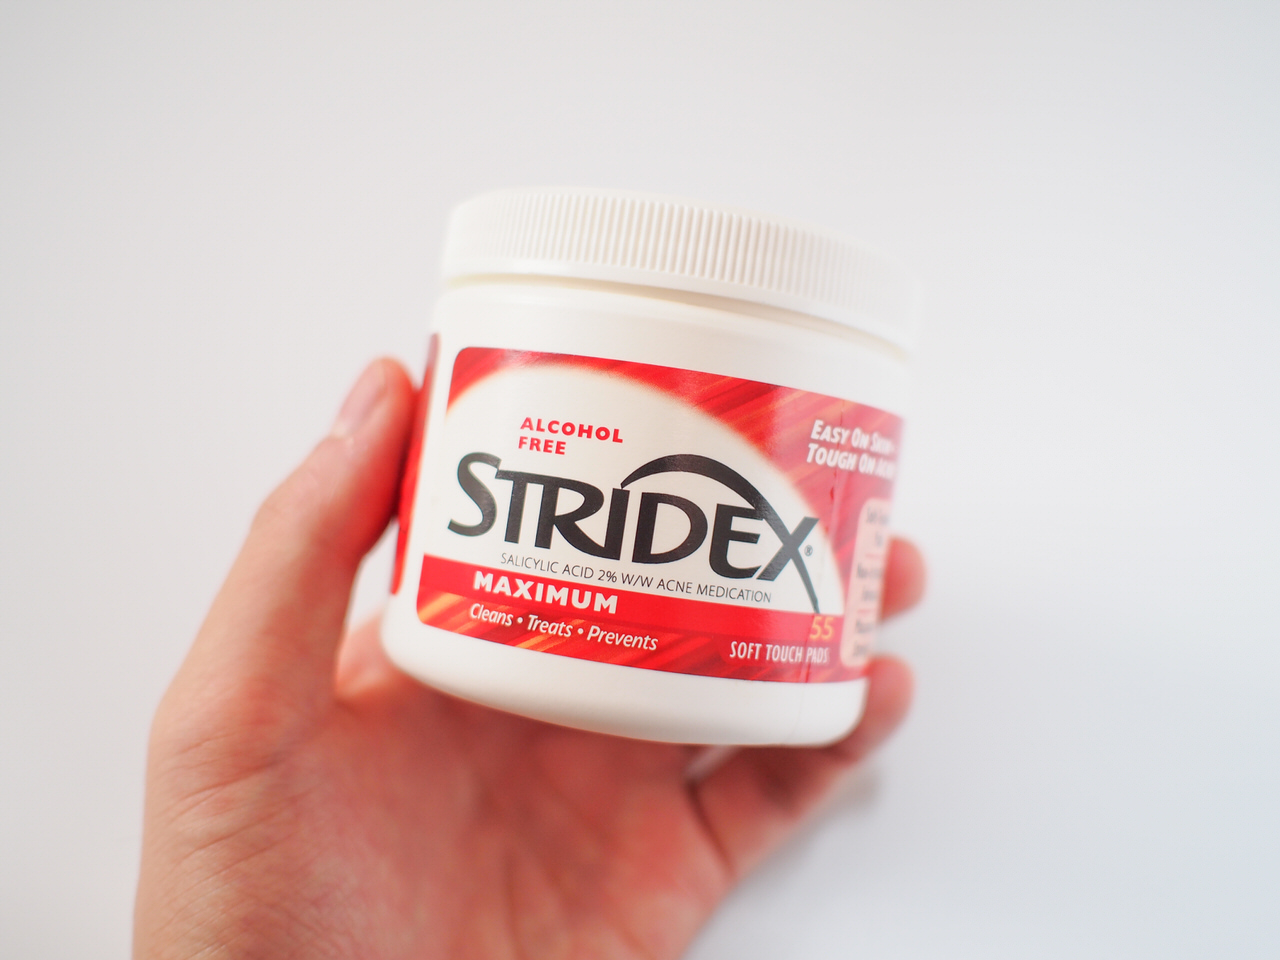 Stridex（ストライデックス）の使い方｜毛穴やニキビ跡への効果